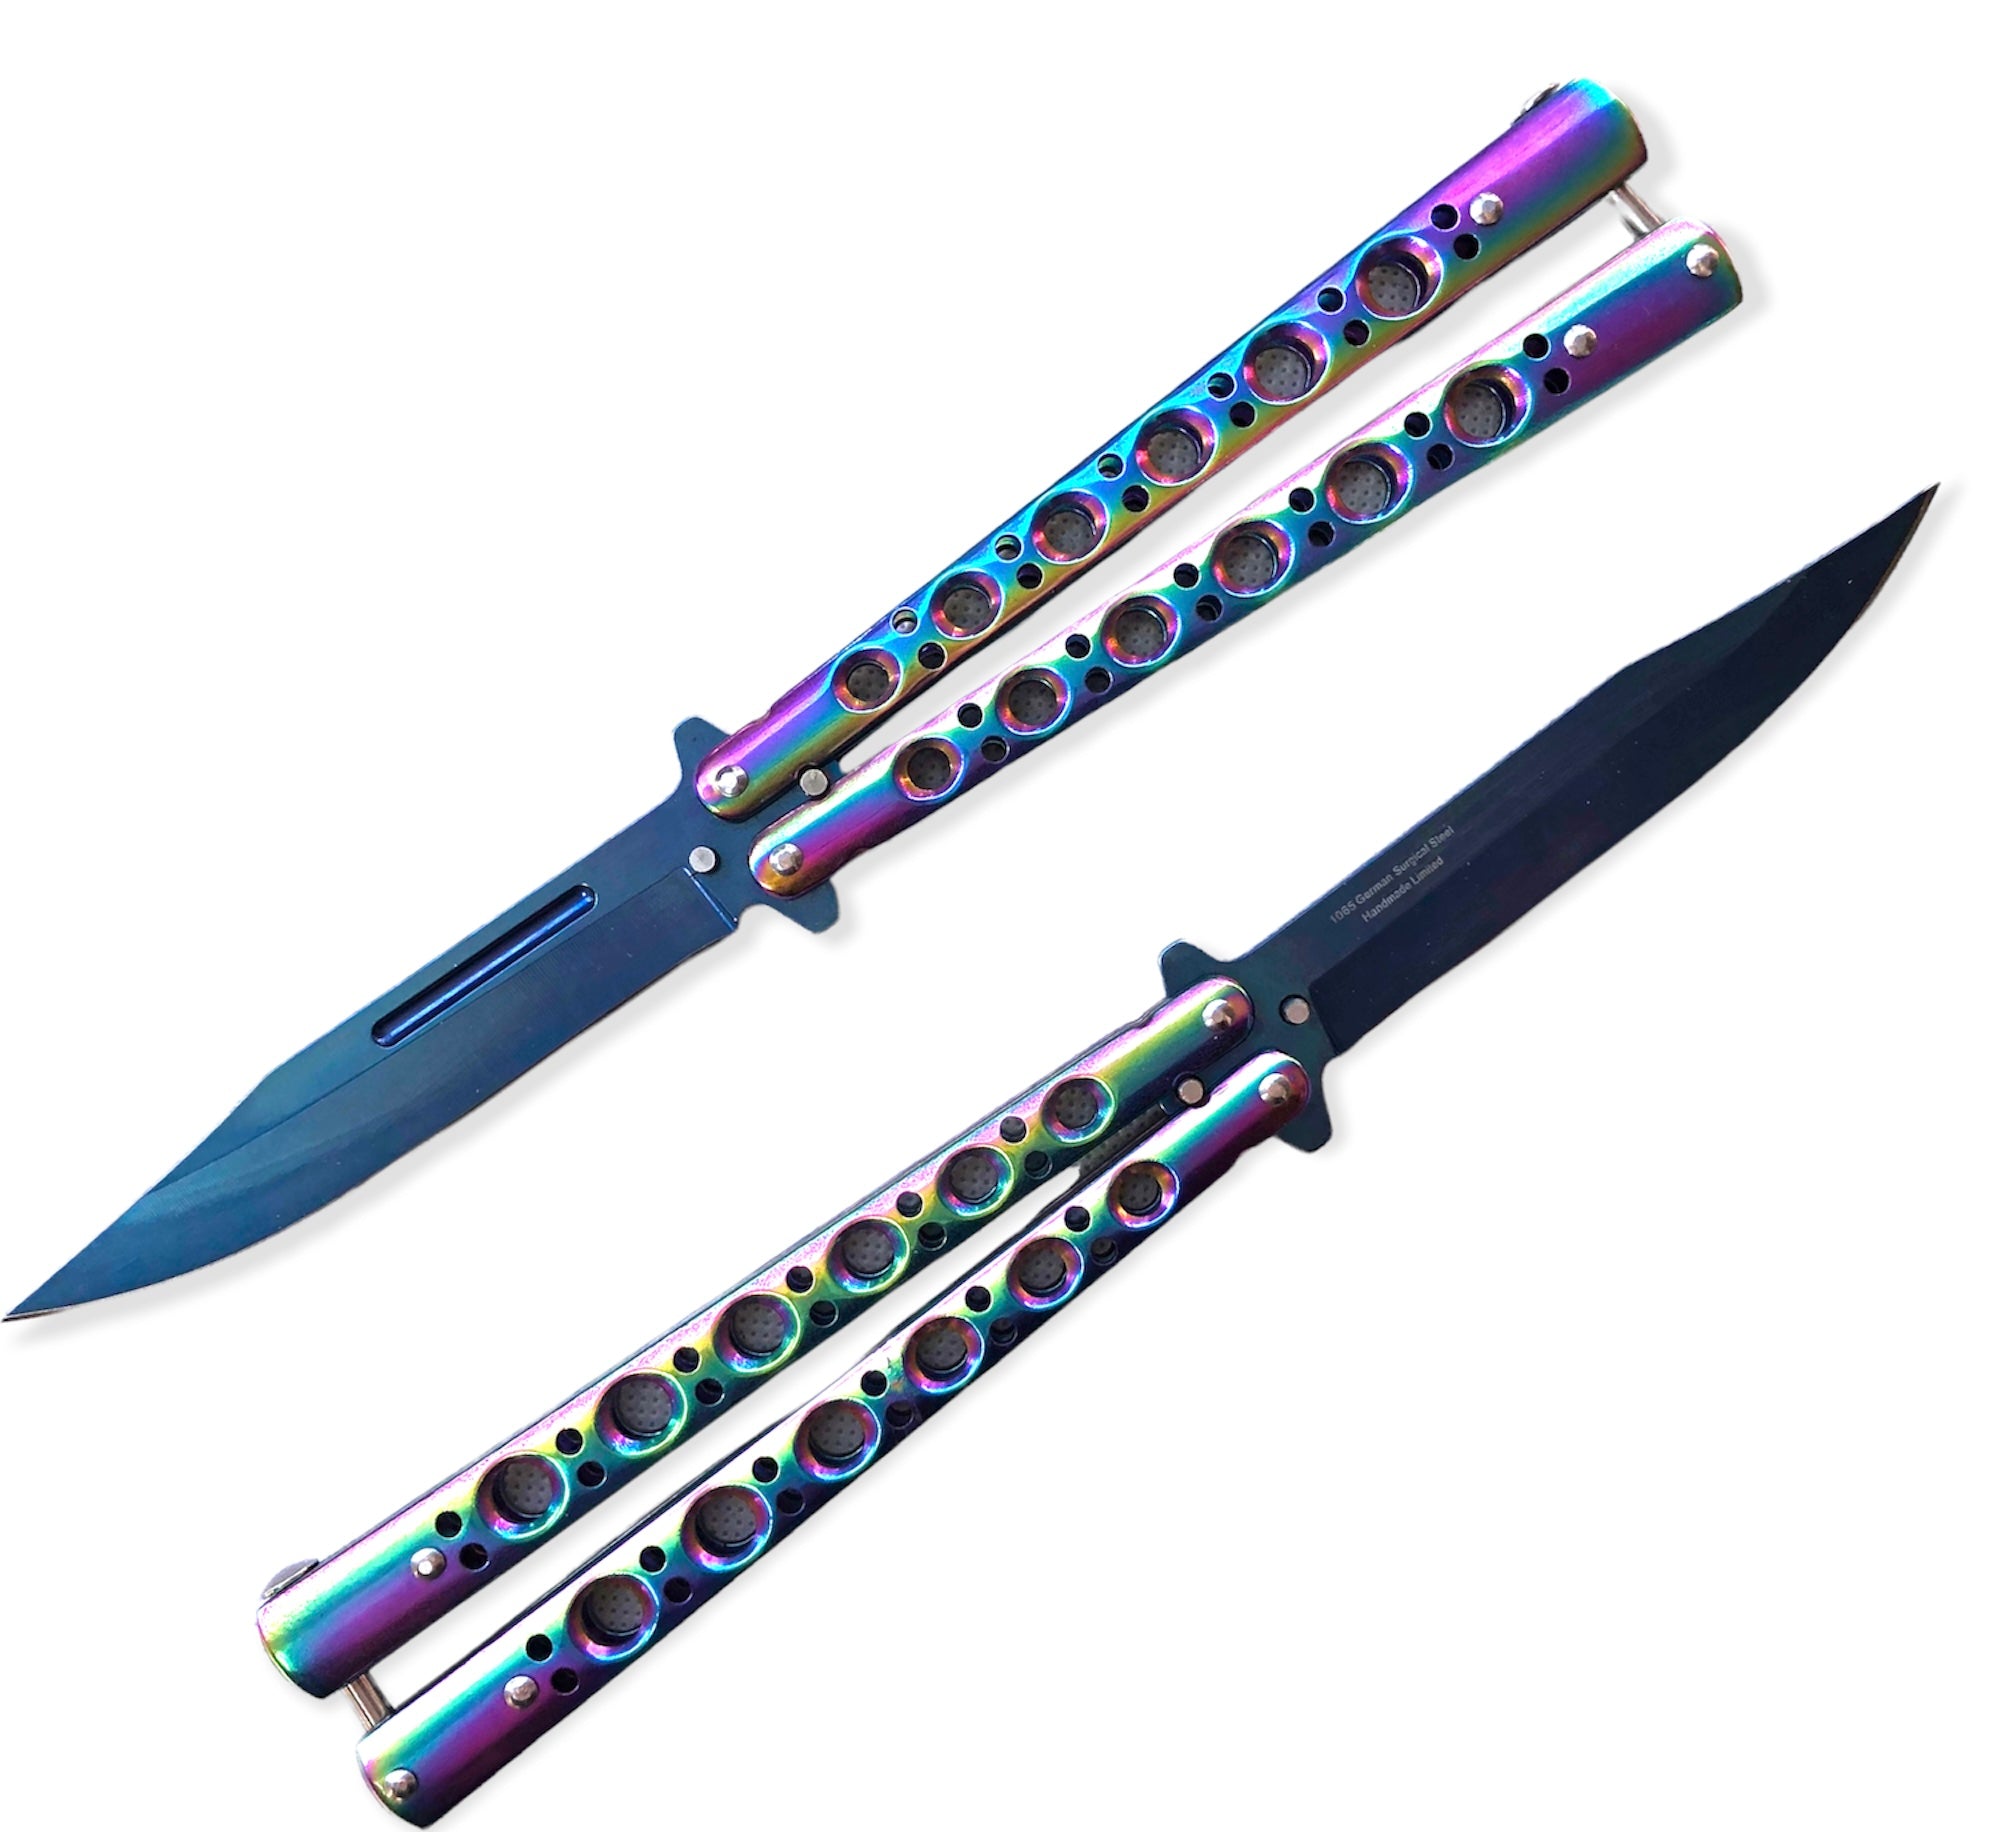 Heavy Duty Rainbow Balisong - Metallic Rainbow Butterfly Knives - Sharp  Rainbow Butterfly Knife